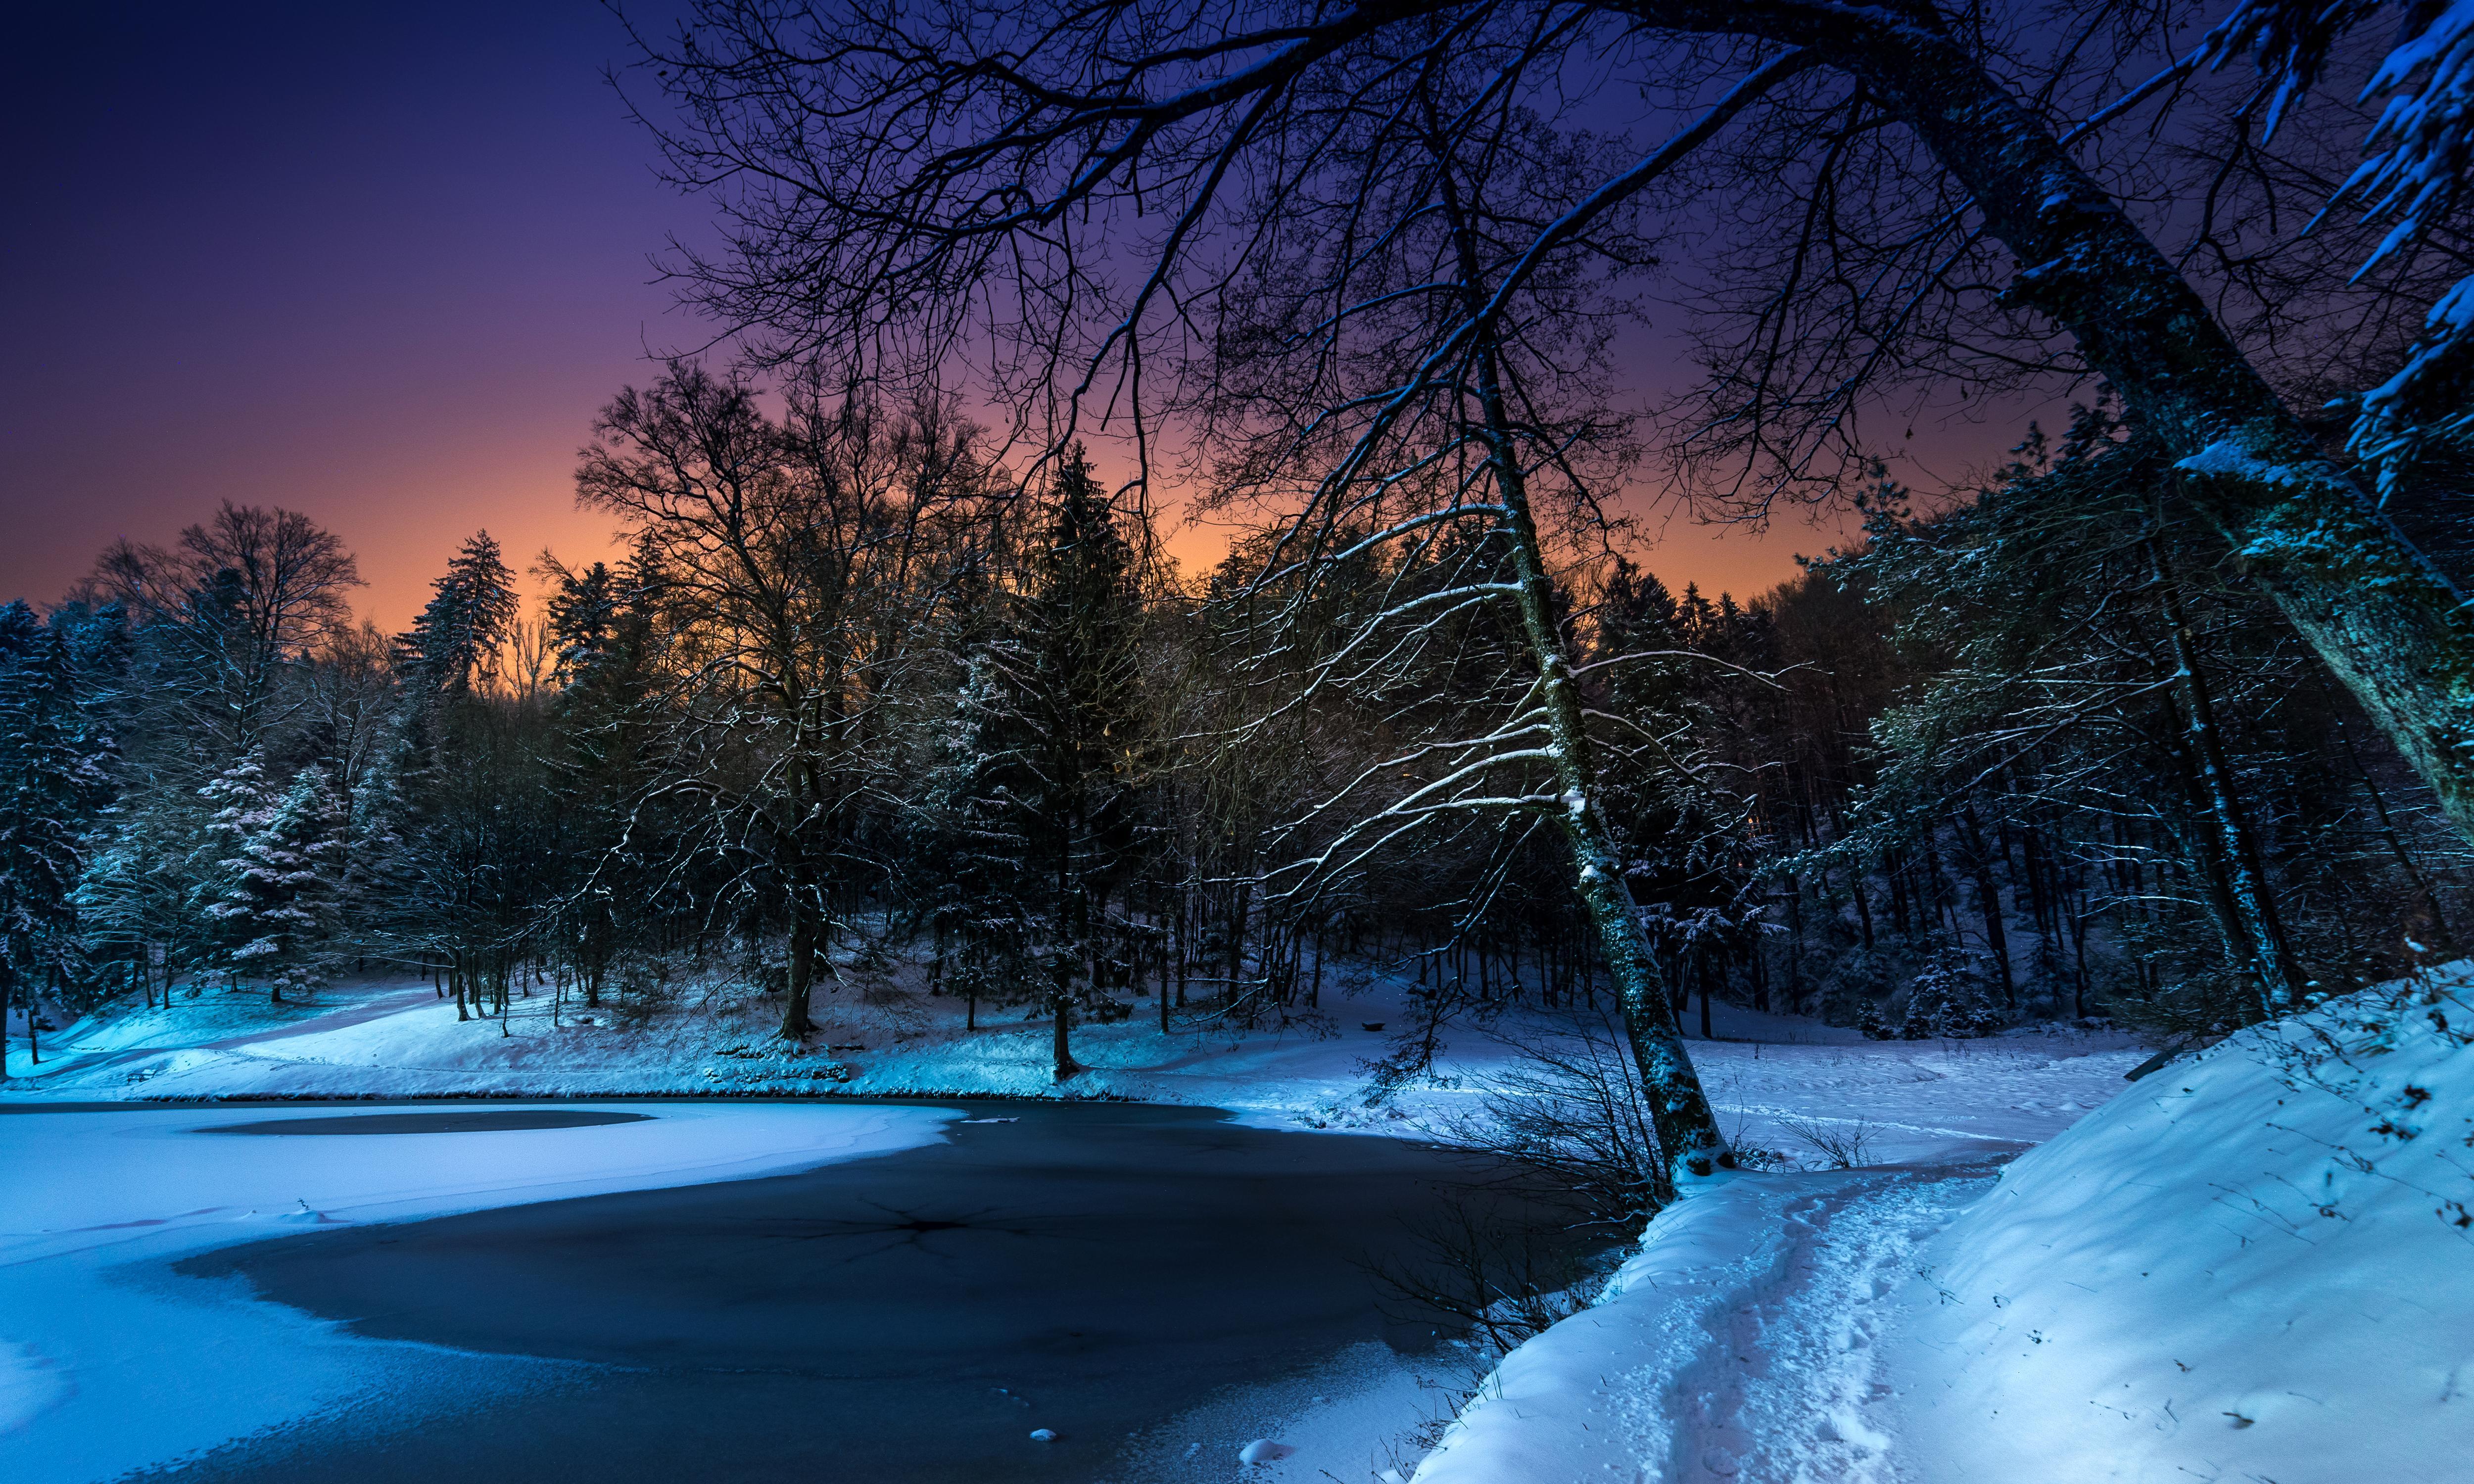 Frozen Winter Pond 4k Ultra HD Wallpaper. Background Image